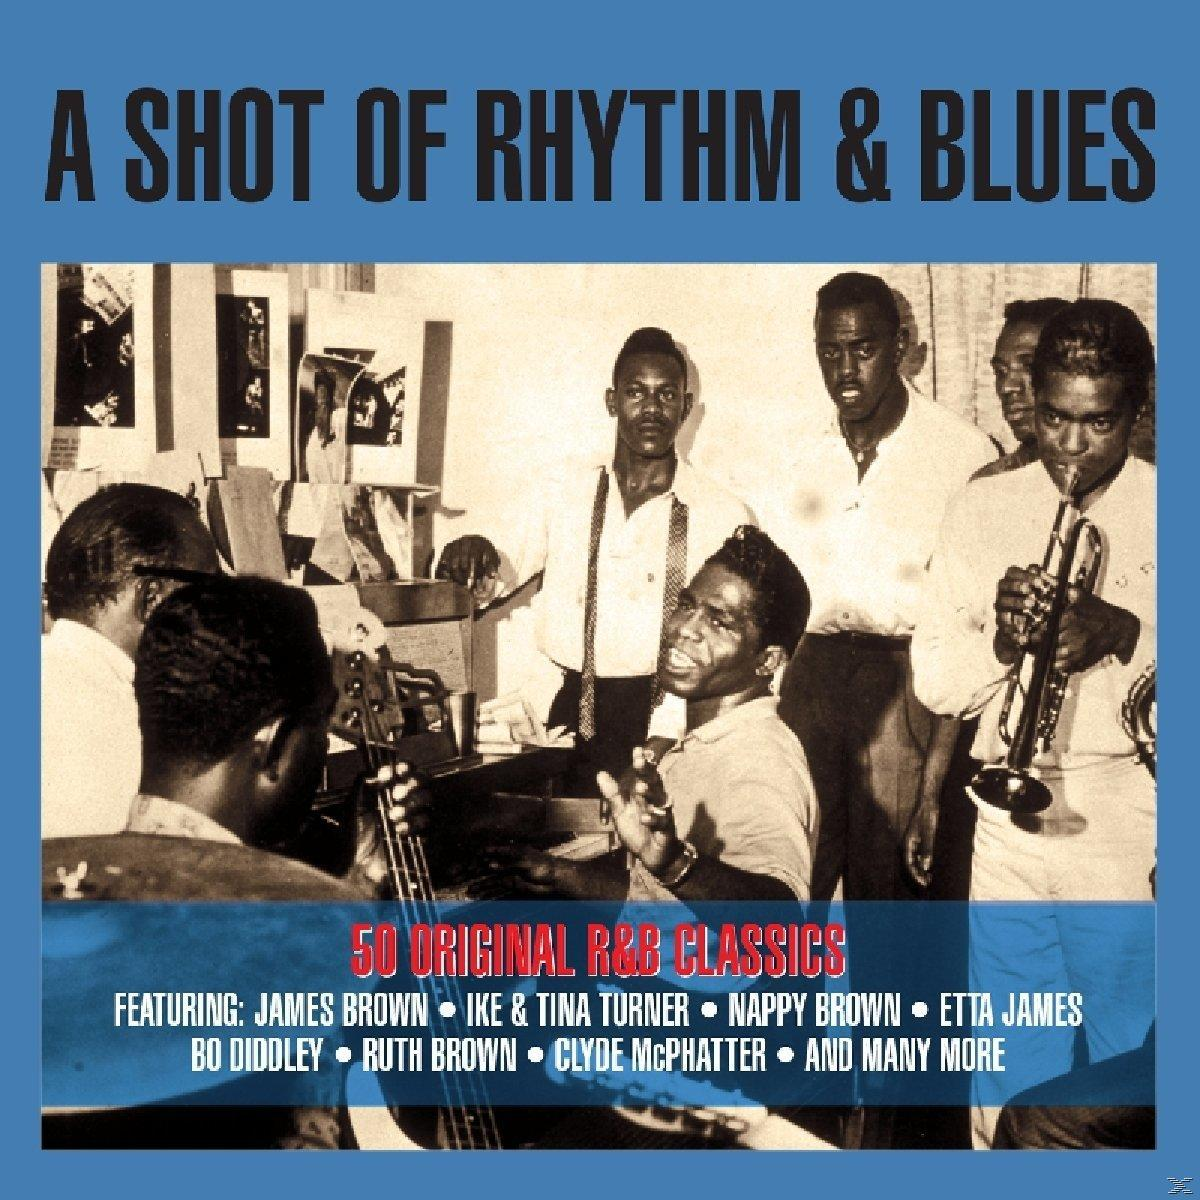 (CD) & Shot - A Rhythm Of - VARIOUS Blues